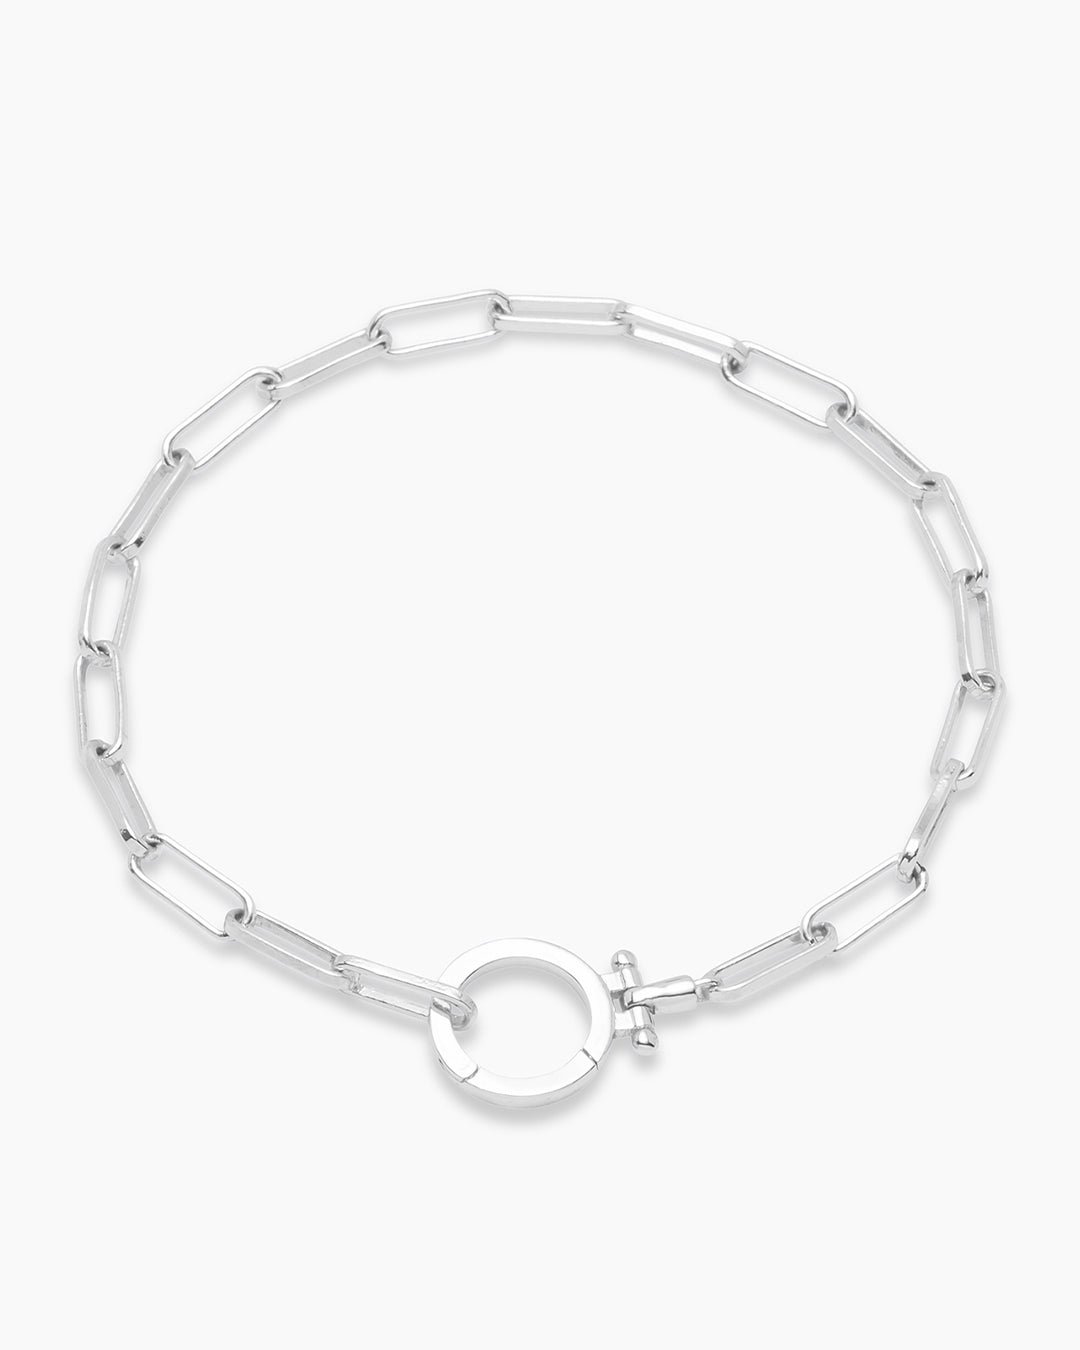 Parker Bracelet Chain link bracelet || option::Silver Plated